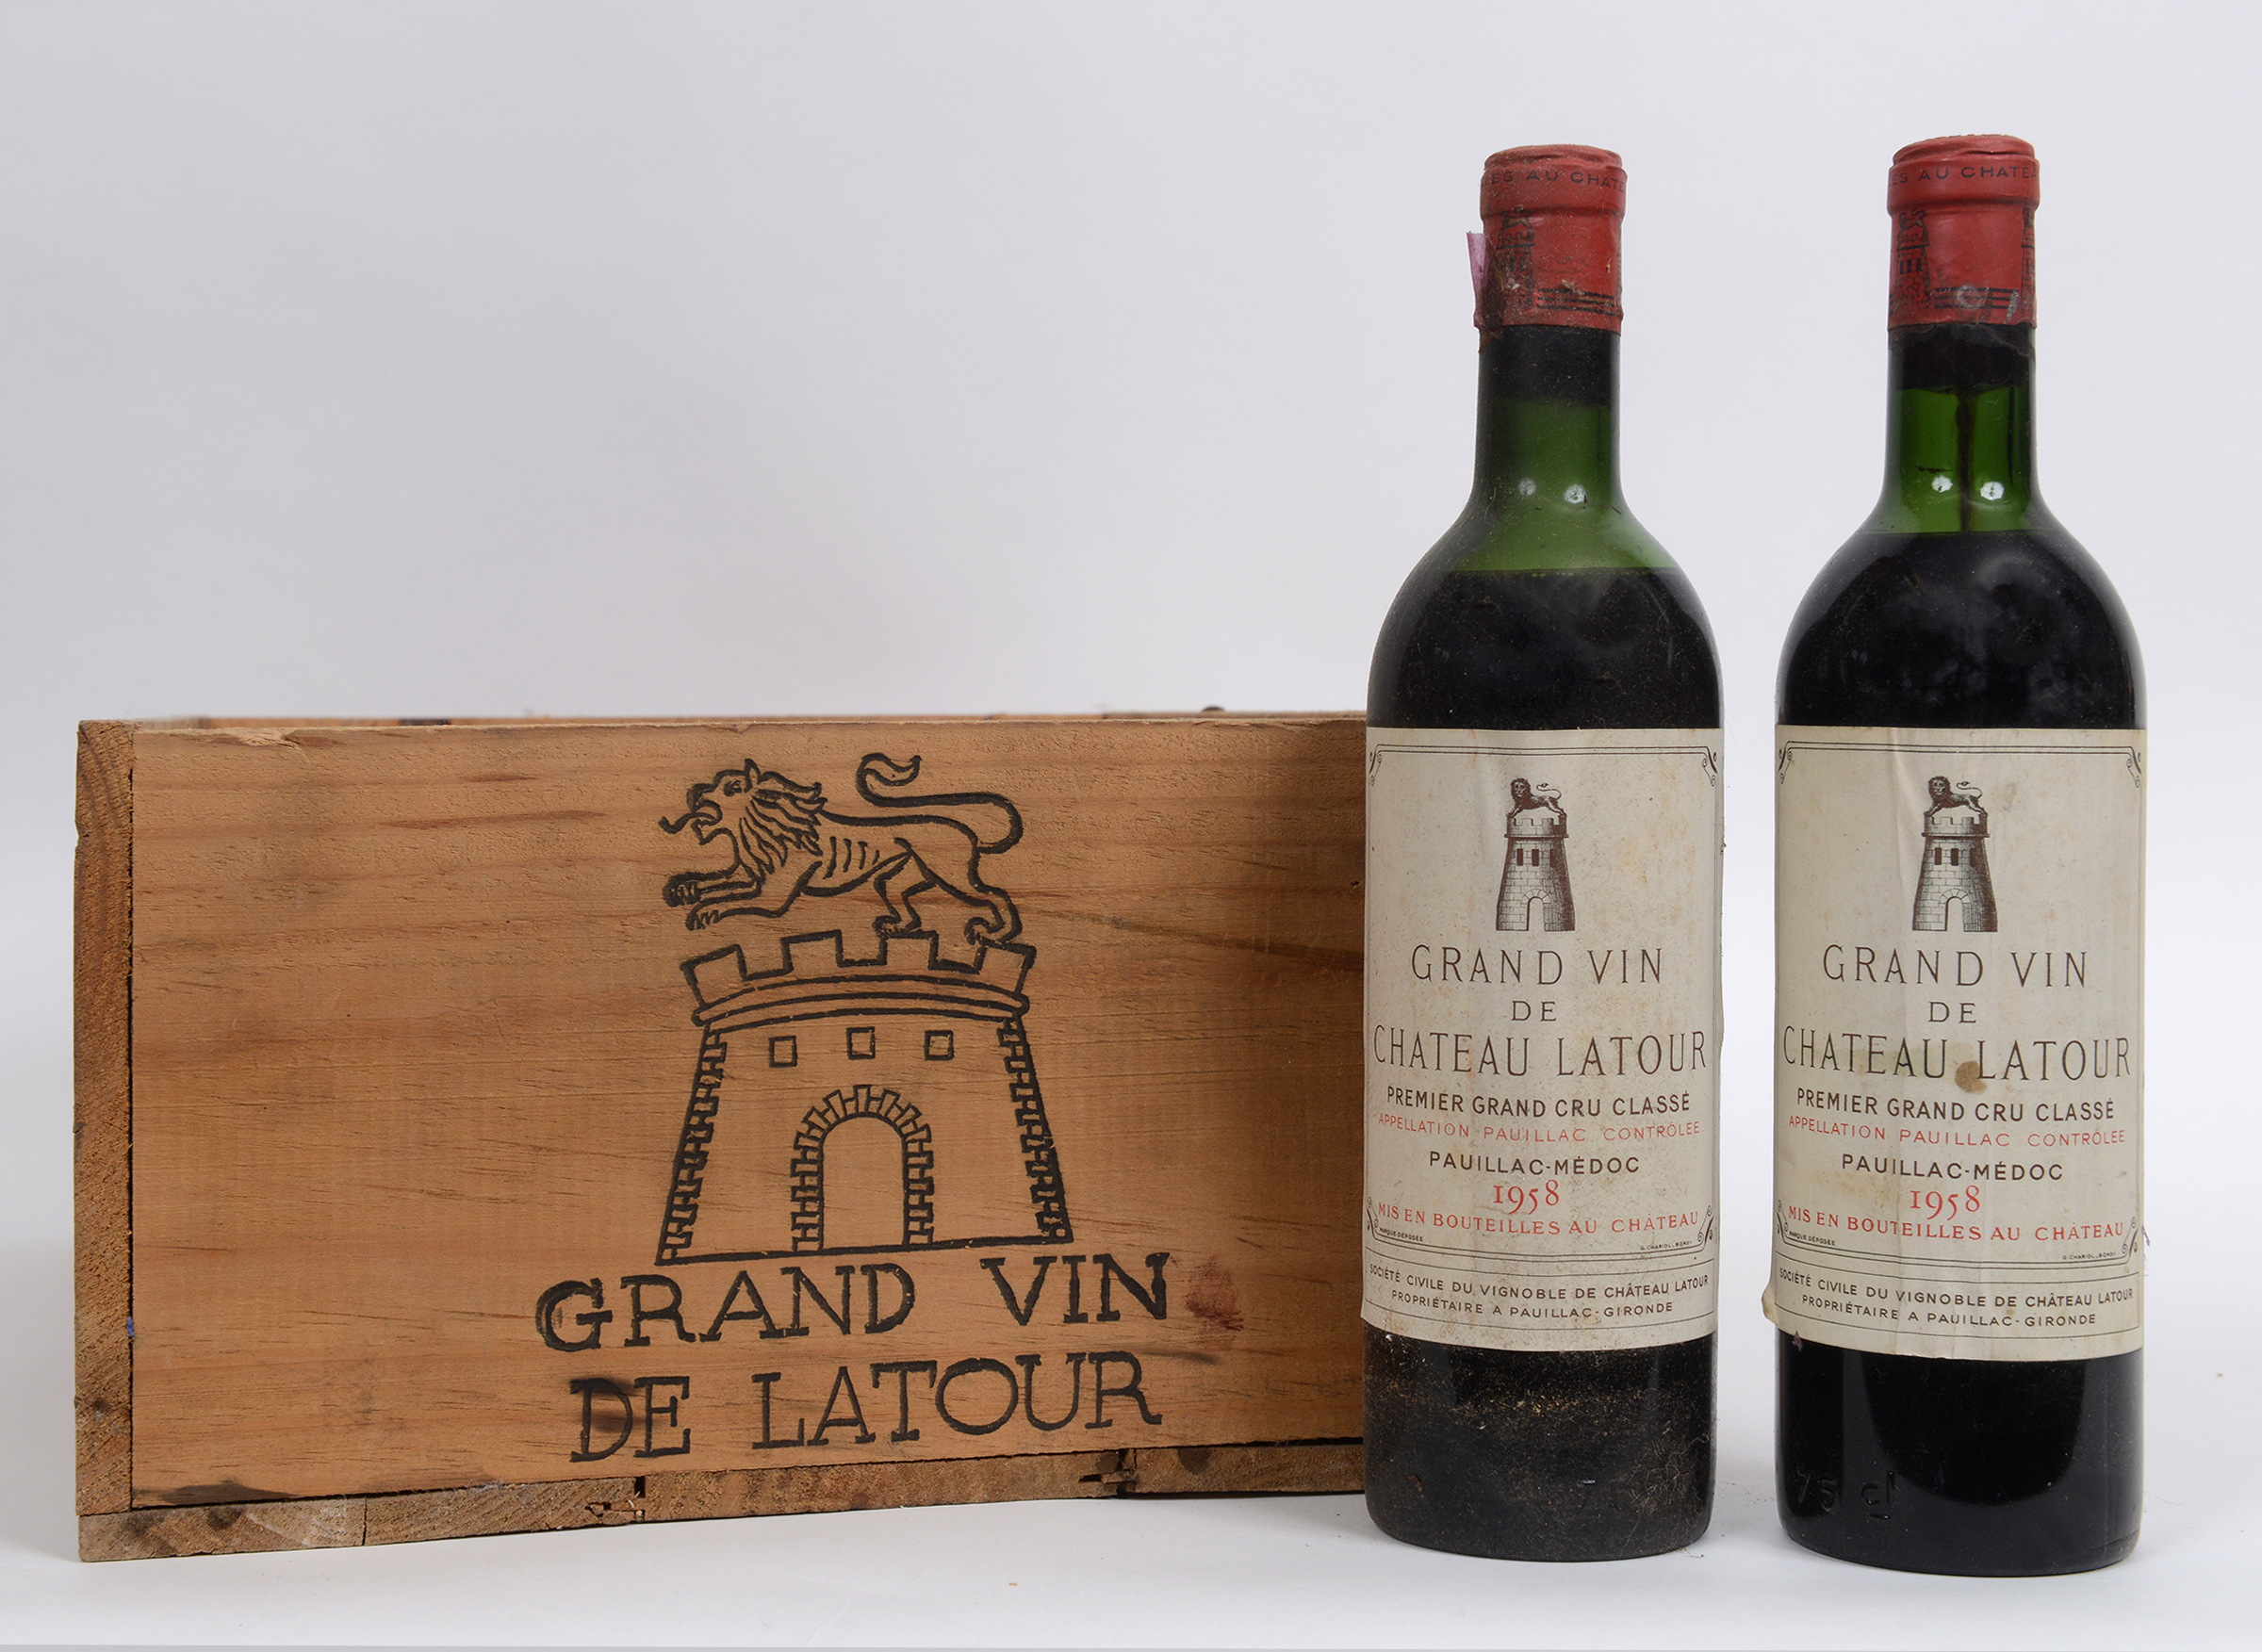 Seven bottles of Chateau Latour Premier Grand Cru Classe, 1958, in a wooden case,